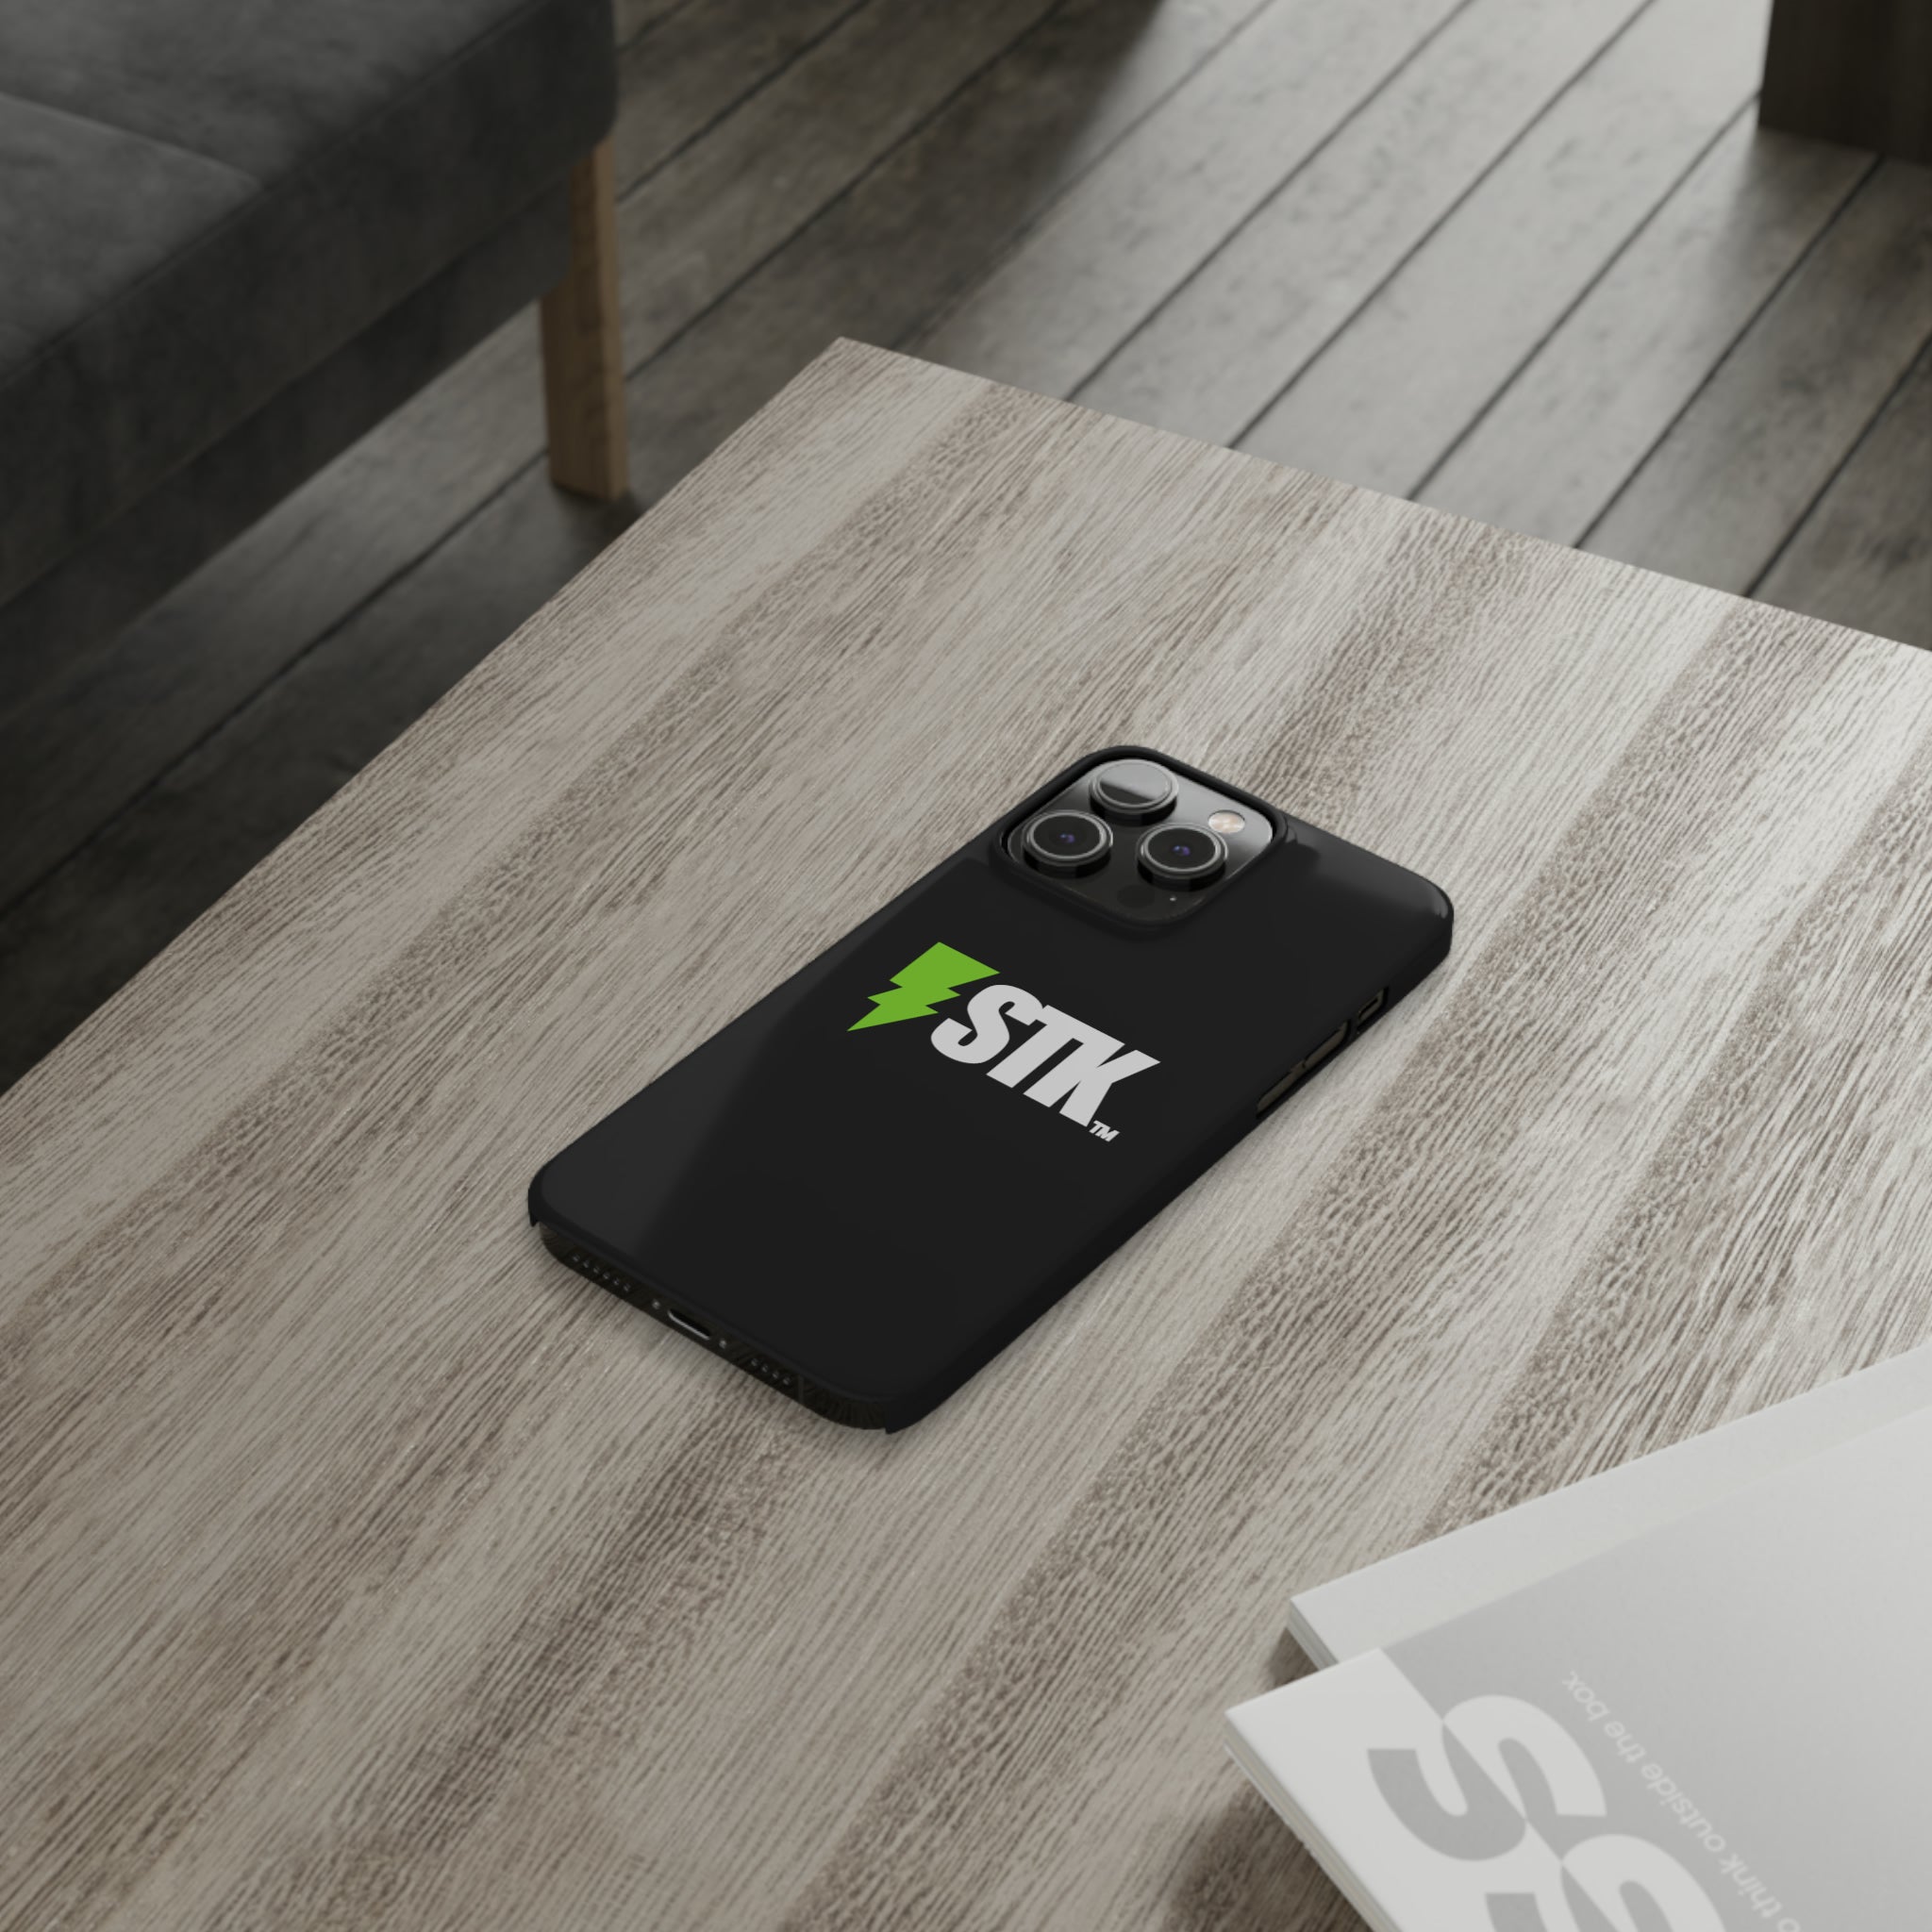 STK | Slim Phone Cases